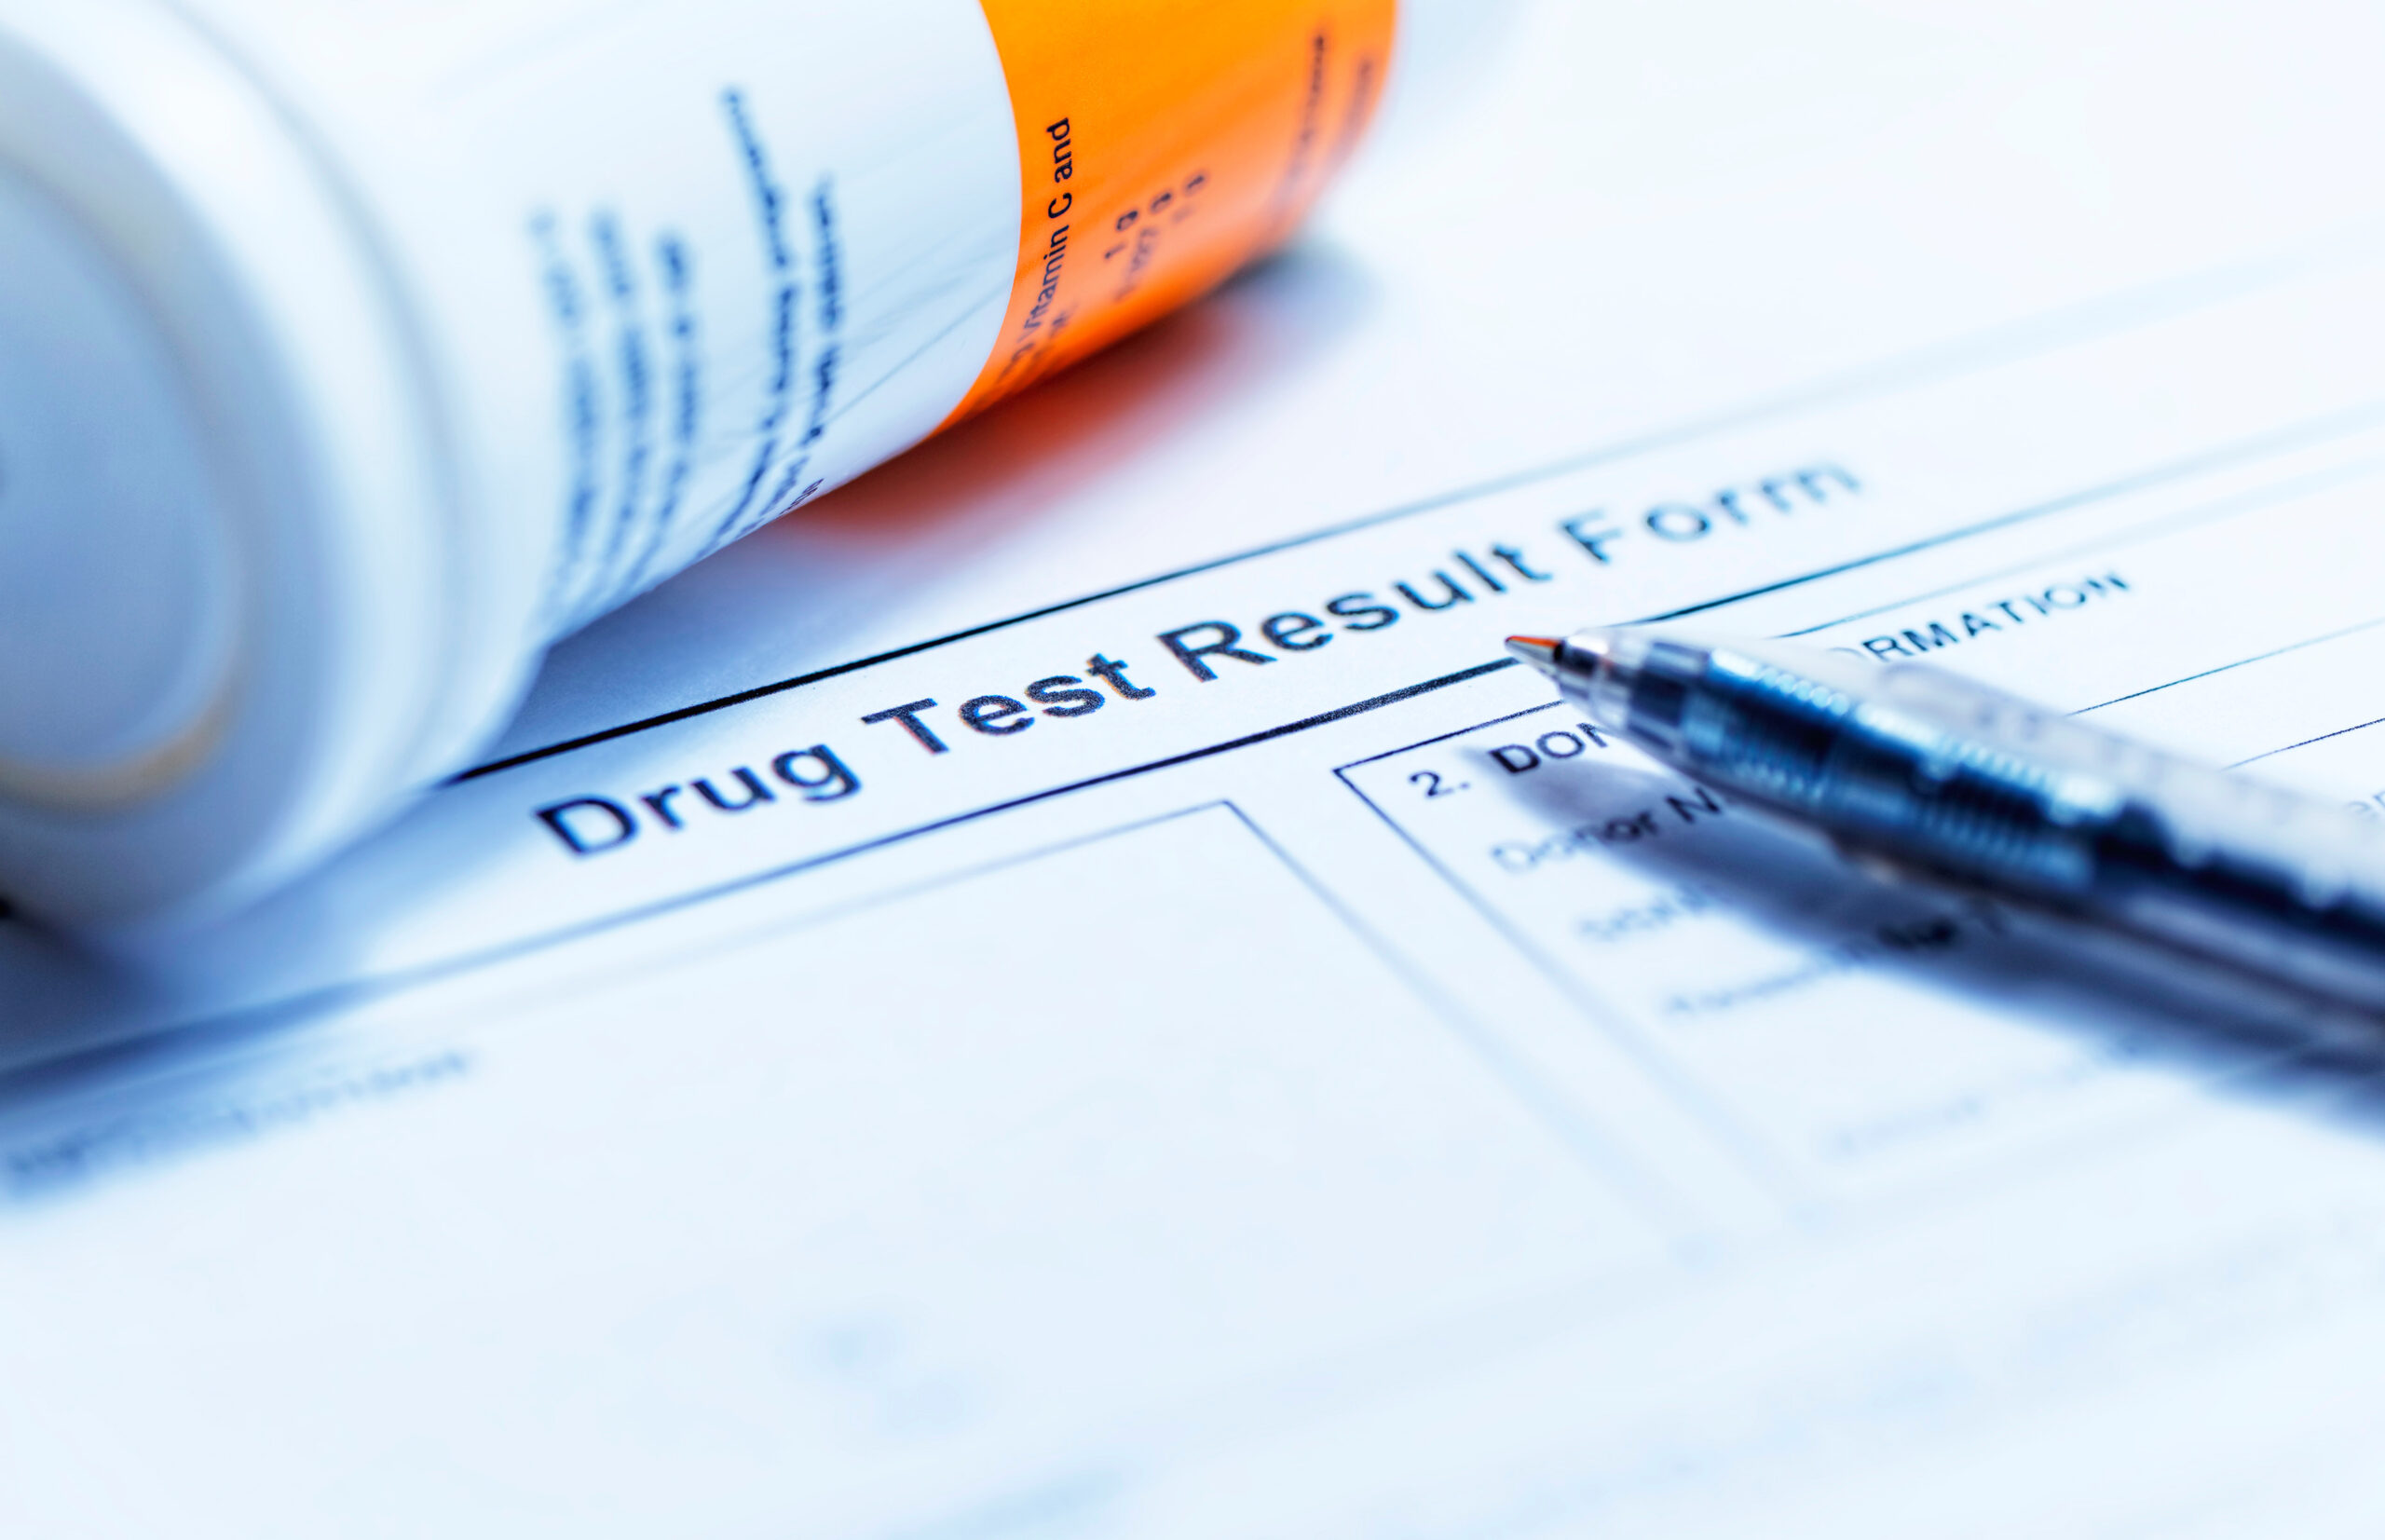 How Do I Order Follicle Drug Testing Services in Lynchburg, VA?